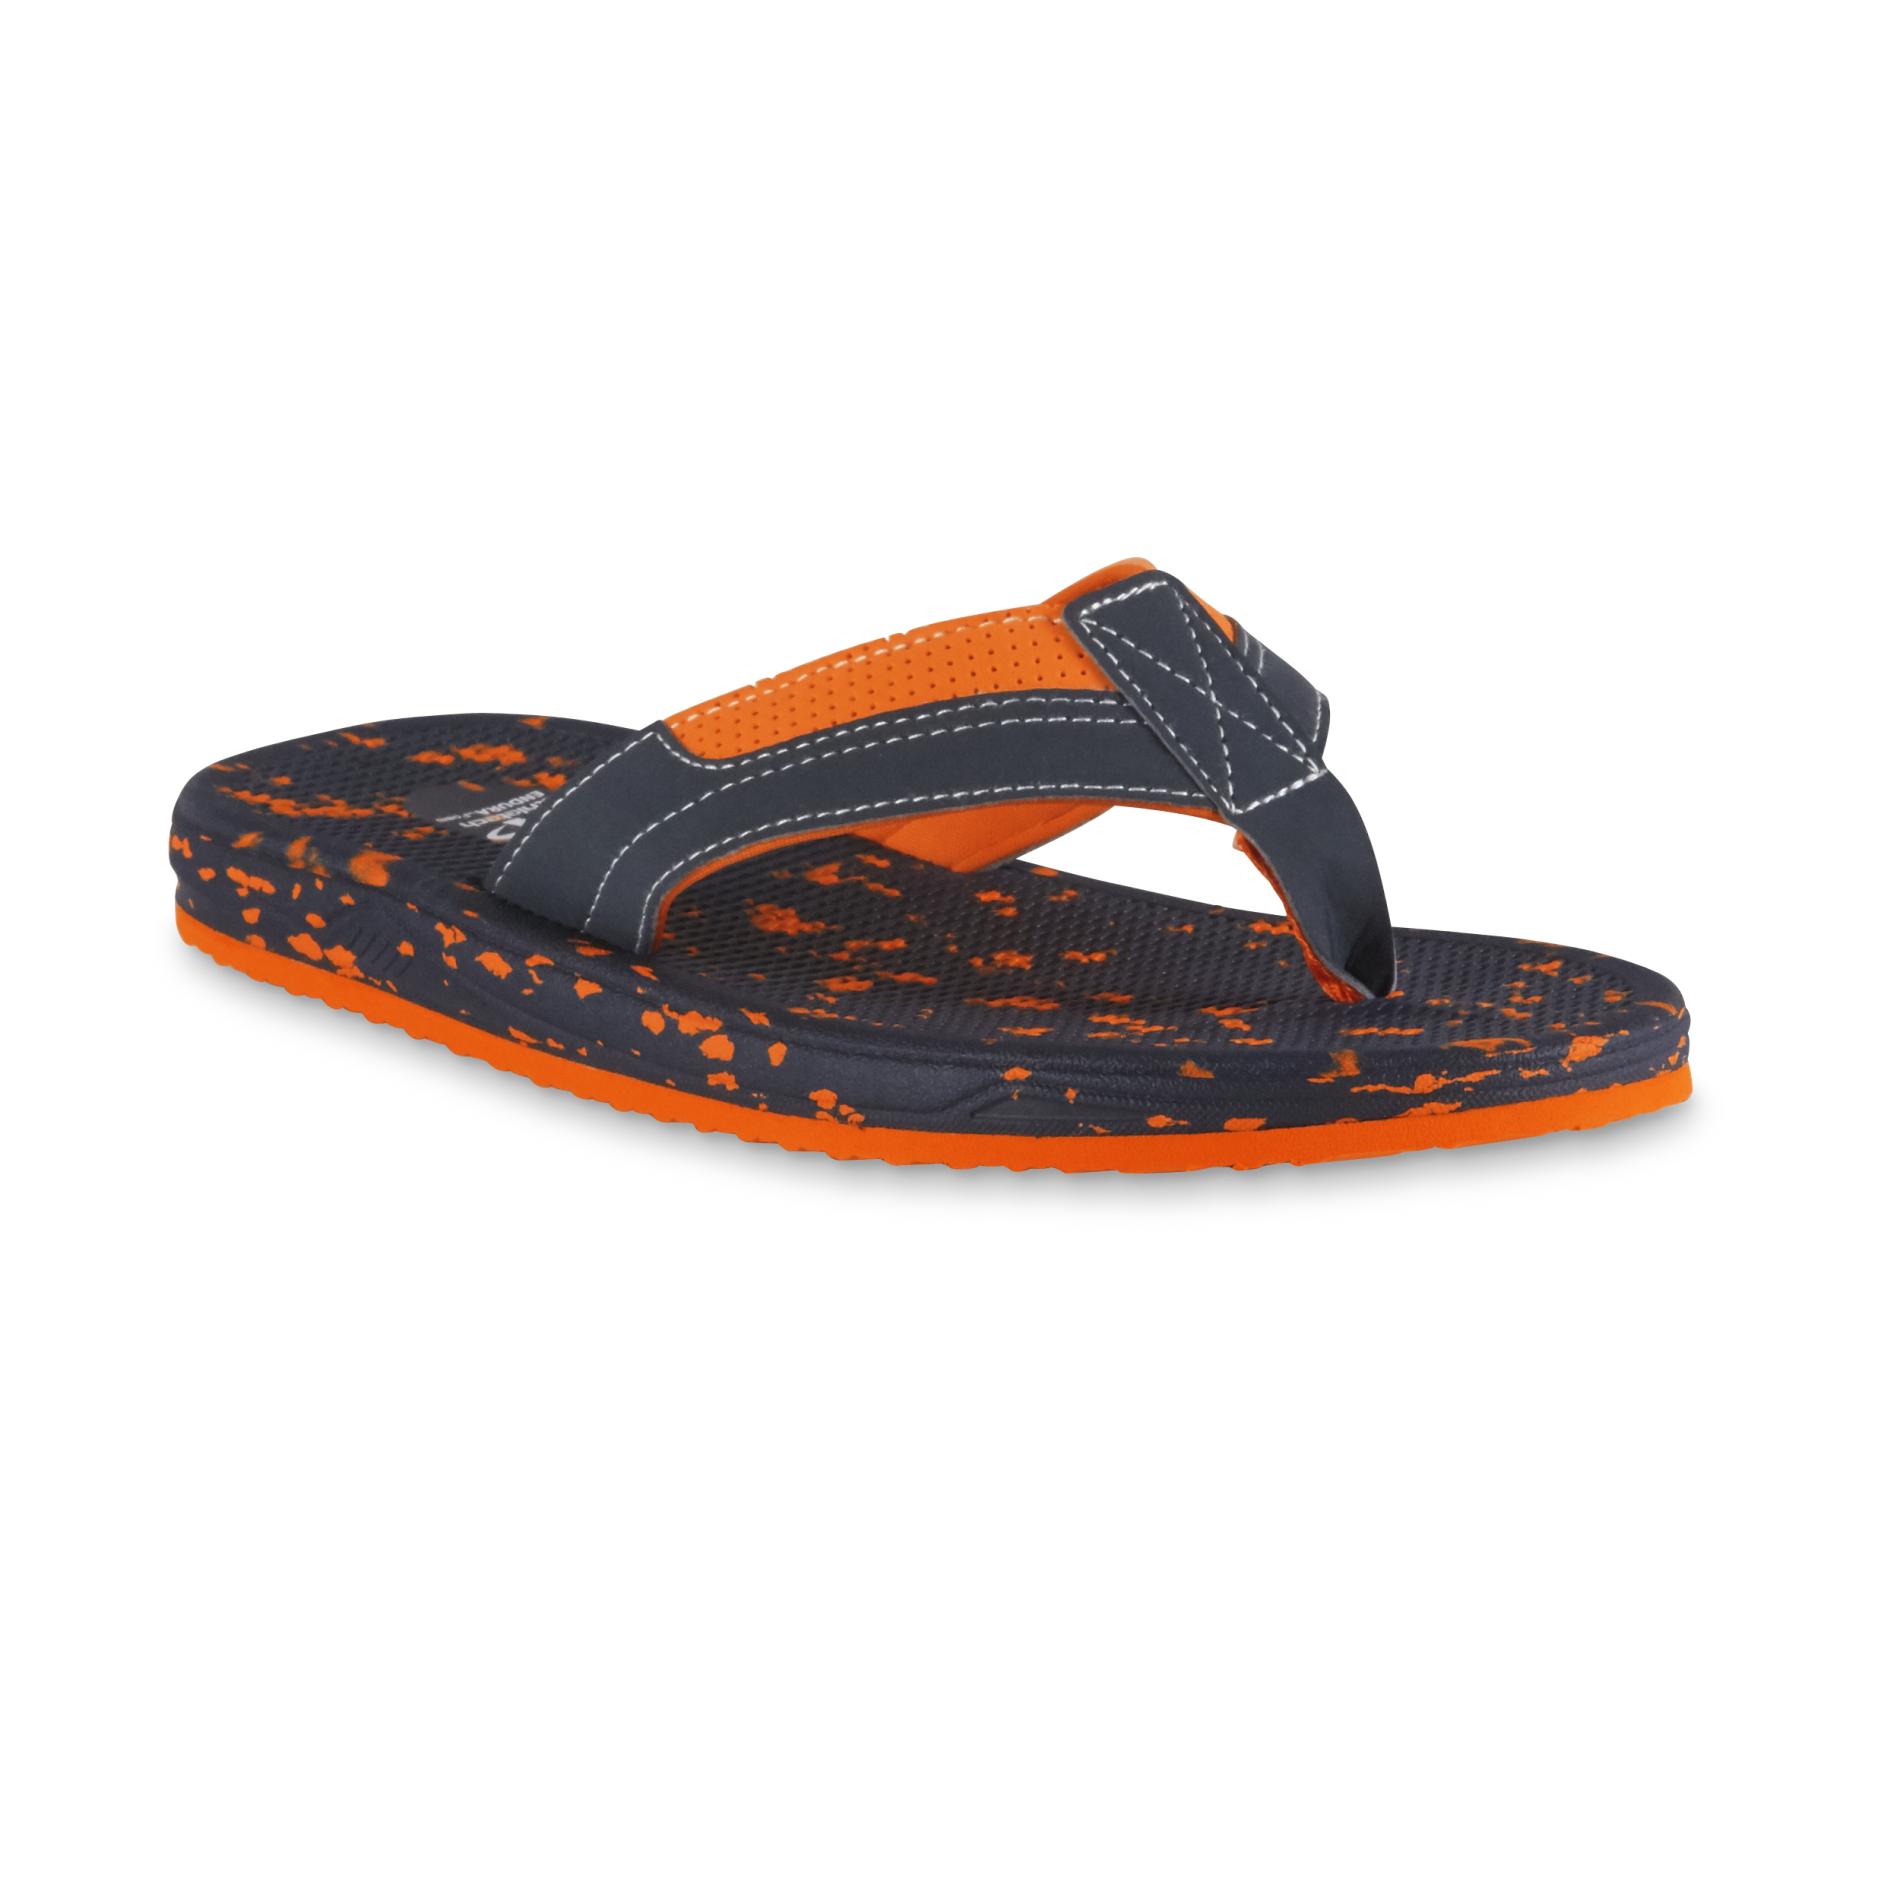 Athletech Men's Fairley Orange/Black Flip-Flop Sandal